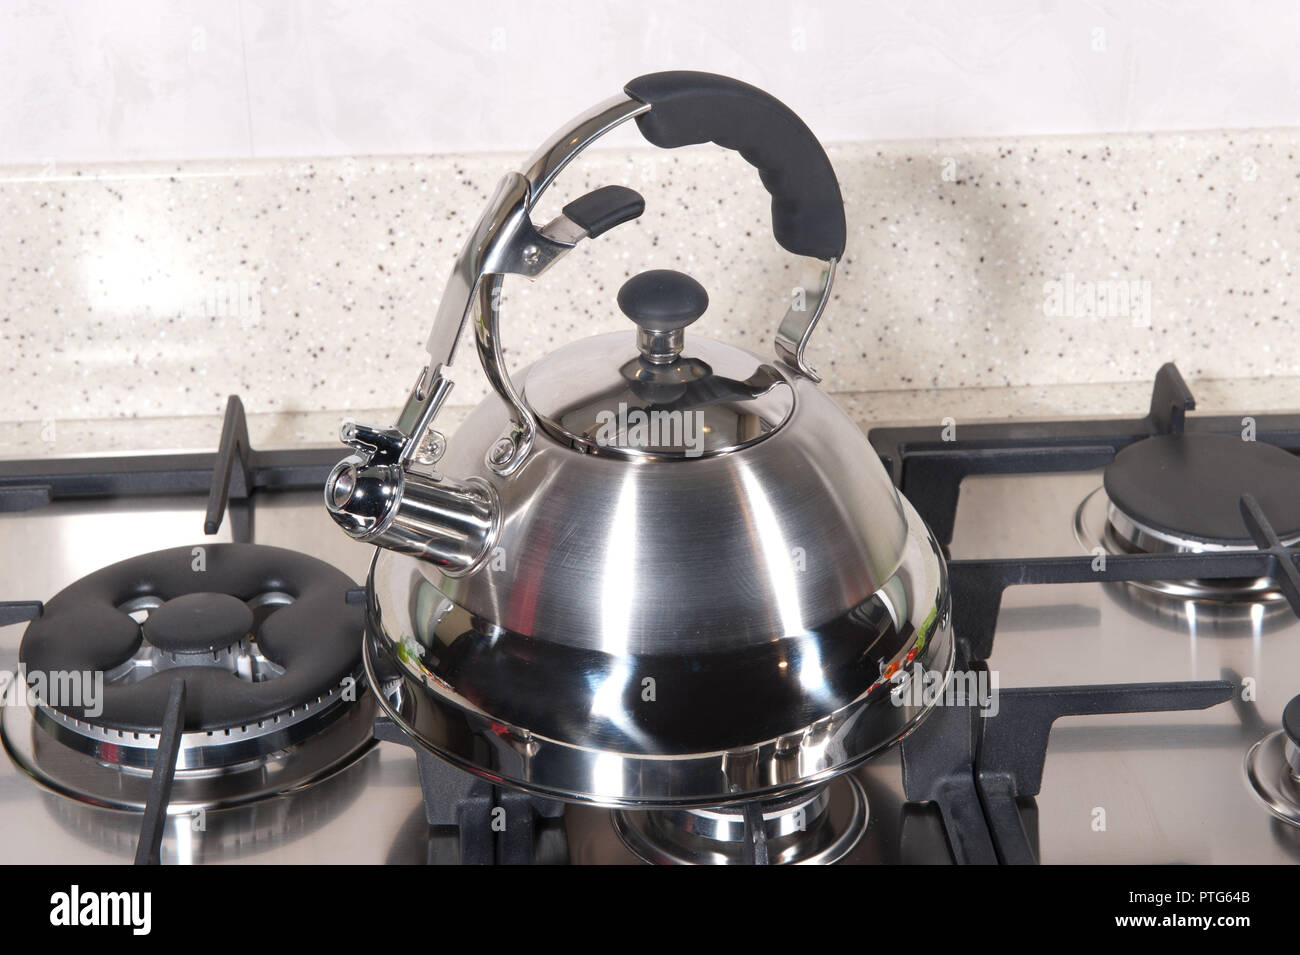 https://c8.alamy.com/comp/PTG64B/metal-kettle-on-the-stove-PTG64B.jpg